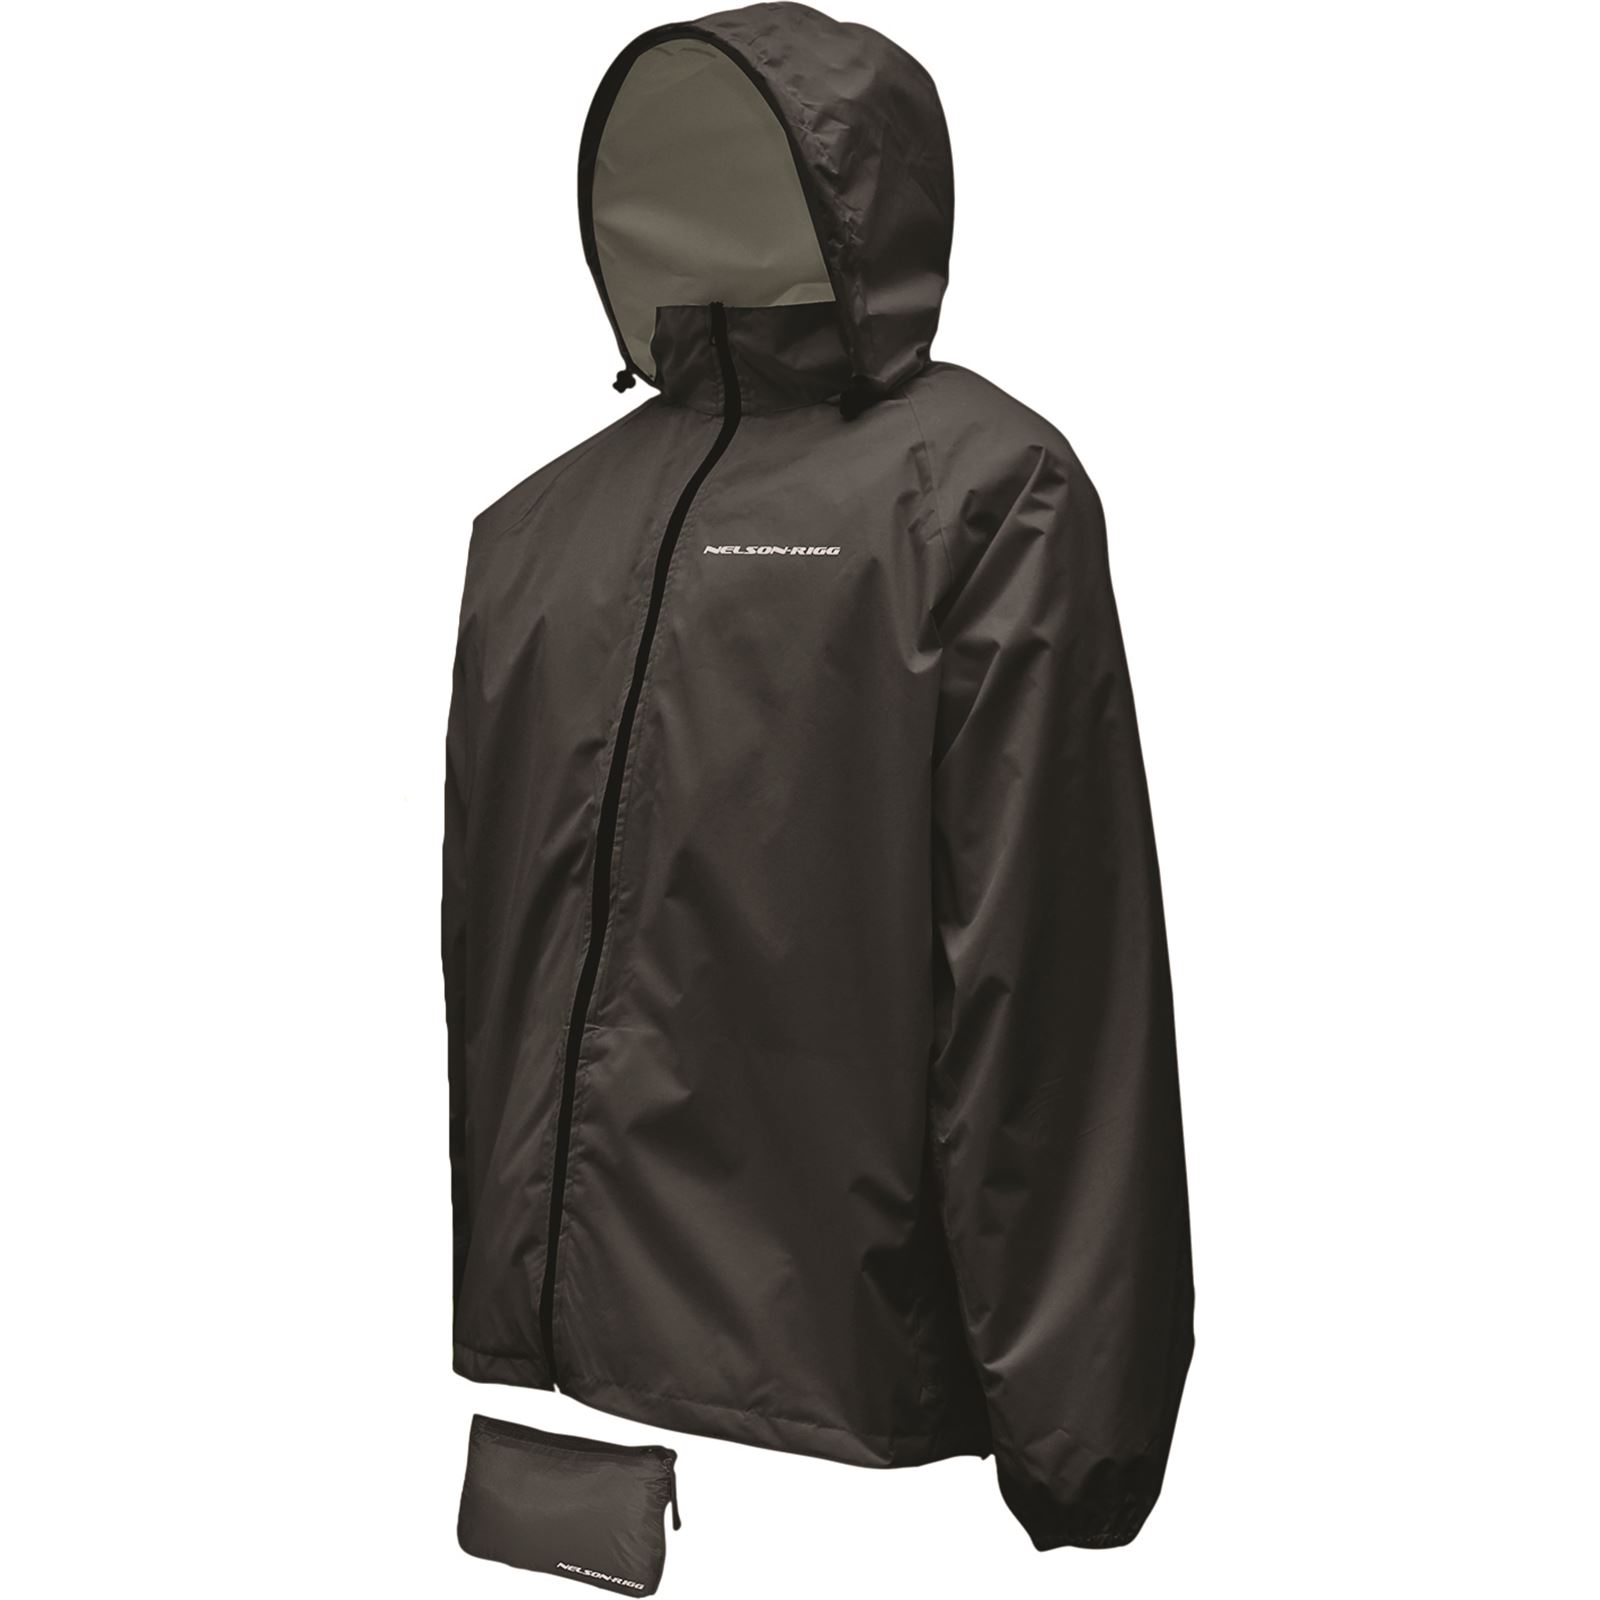 Nelson-Rigg Compact Rain Jacket